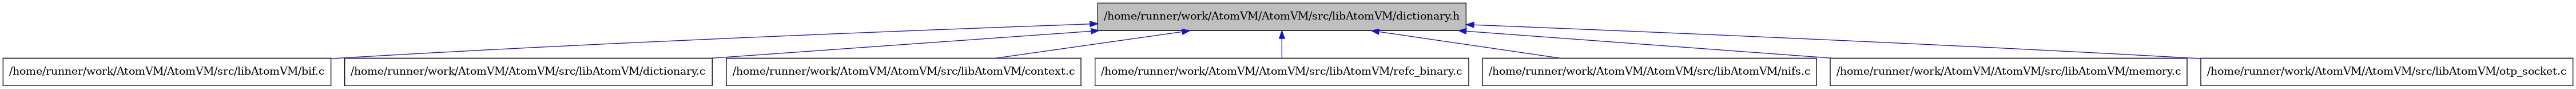 digraph {
    graph [bgcolor="#00000000"]
    node [shape=rectangle style=filled fillcolor="#FFFFFF" font=Helvetica padding=2]
    edge [color="#1414CE"]
    "2" [label="/home/runner/work/AtomVM/AtomVM/src/libAtomVM/bif.c" tooltip="/home/runner/work/AtomVM/AtomVM/src/libAtomVM/bif.c"]
    "4" [label="/home/runner/work/AtomVM/AtomVM/src/libAtomVM/dictionary.c" tooltip="/home/runner/work/AtomVM/AtomVM/src/libAtomVM/dictionary.c"]
    "1" [label="/home/runner/work/AtomVM/AtomVM/src/libAtomVM/dictionary.h" tooltip="/home/runner/work/AtomVM/AtomVM/src/libAtomVM/dictionary.h" fillcolor="#BFBFBF"]
    "3" [label="/home/runner/work/AtomVM/AtomVM/src/libAtomVM/context.c" tooltip="/home/runner/work/AtomVM/AtomVM/src/libAtomVM/context.c"]
    "8" [label="/home/runner/work/AtomVM/AtomVM/src/libAtomVM/refc_binary.c" tooltip="/home/runner/work/AtomVM/AtomVM/src/libAtomVM/refc_binary.c"]
    "6" [label="/home/runner/work/AtomVM/AtomVM/src/libAtomVM/nifs.c" tooltip="/home/runner/work/AtomVM/AtomVM/src/libAtomVM/nifs.c"]
    "5" [label="/home/runner/work/AtomVM/AtomVM/src/libAtomVM/memory.c" tooltip="/home/runner/work/AtomVM/AtomVM/src/libAtomVM/memory.c"]
    "7" [label="/home/runner/work/AtomVM/AtomVM/src/libAtomVM/otp_socket.c" tooltip="/home/runner/work/AtomVM/AtomVM/src/libAtomVM/otp_socket.c"]
    "1" -> "2" [dir=back tooltip="include"]
    "1" -> "3" [dir=back tooltip="include"]
    "1" -> "4" [dir=back tooltip="include"]
    "1" -> "5" [dir=back tooltip="include"]
    "1" -> "6" [dir=back tooltip="include"]
    "1" -> "7" [dir=back tooltip="include"]
    "1" -> "8" [dir=back tooltip="include"]
}